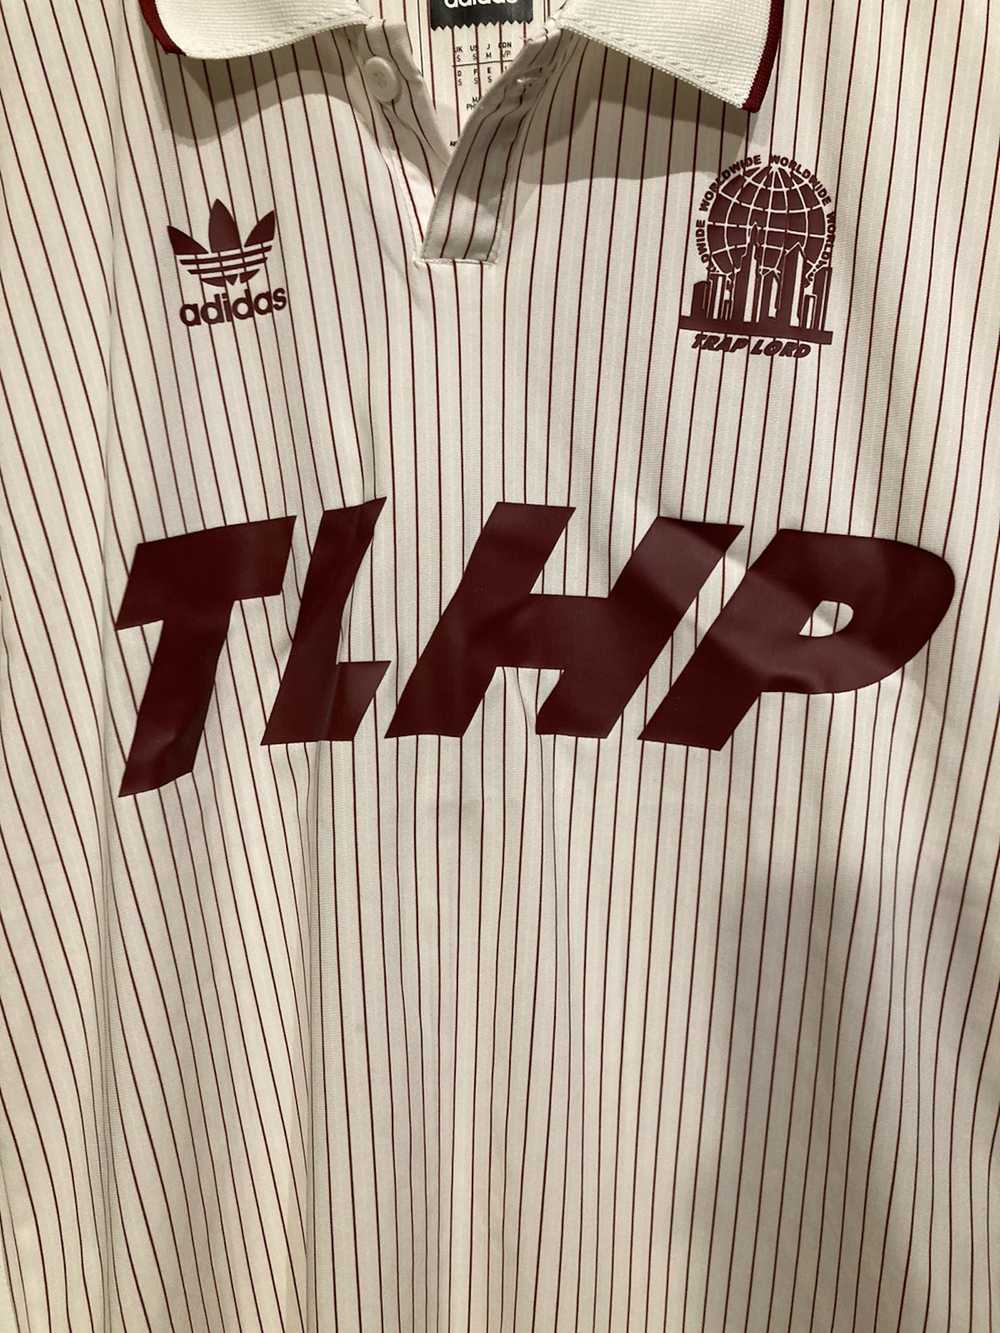 Adidas A$AP Ferg Trap Lord jersey - image 2